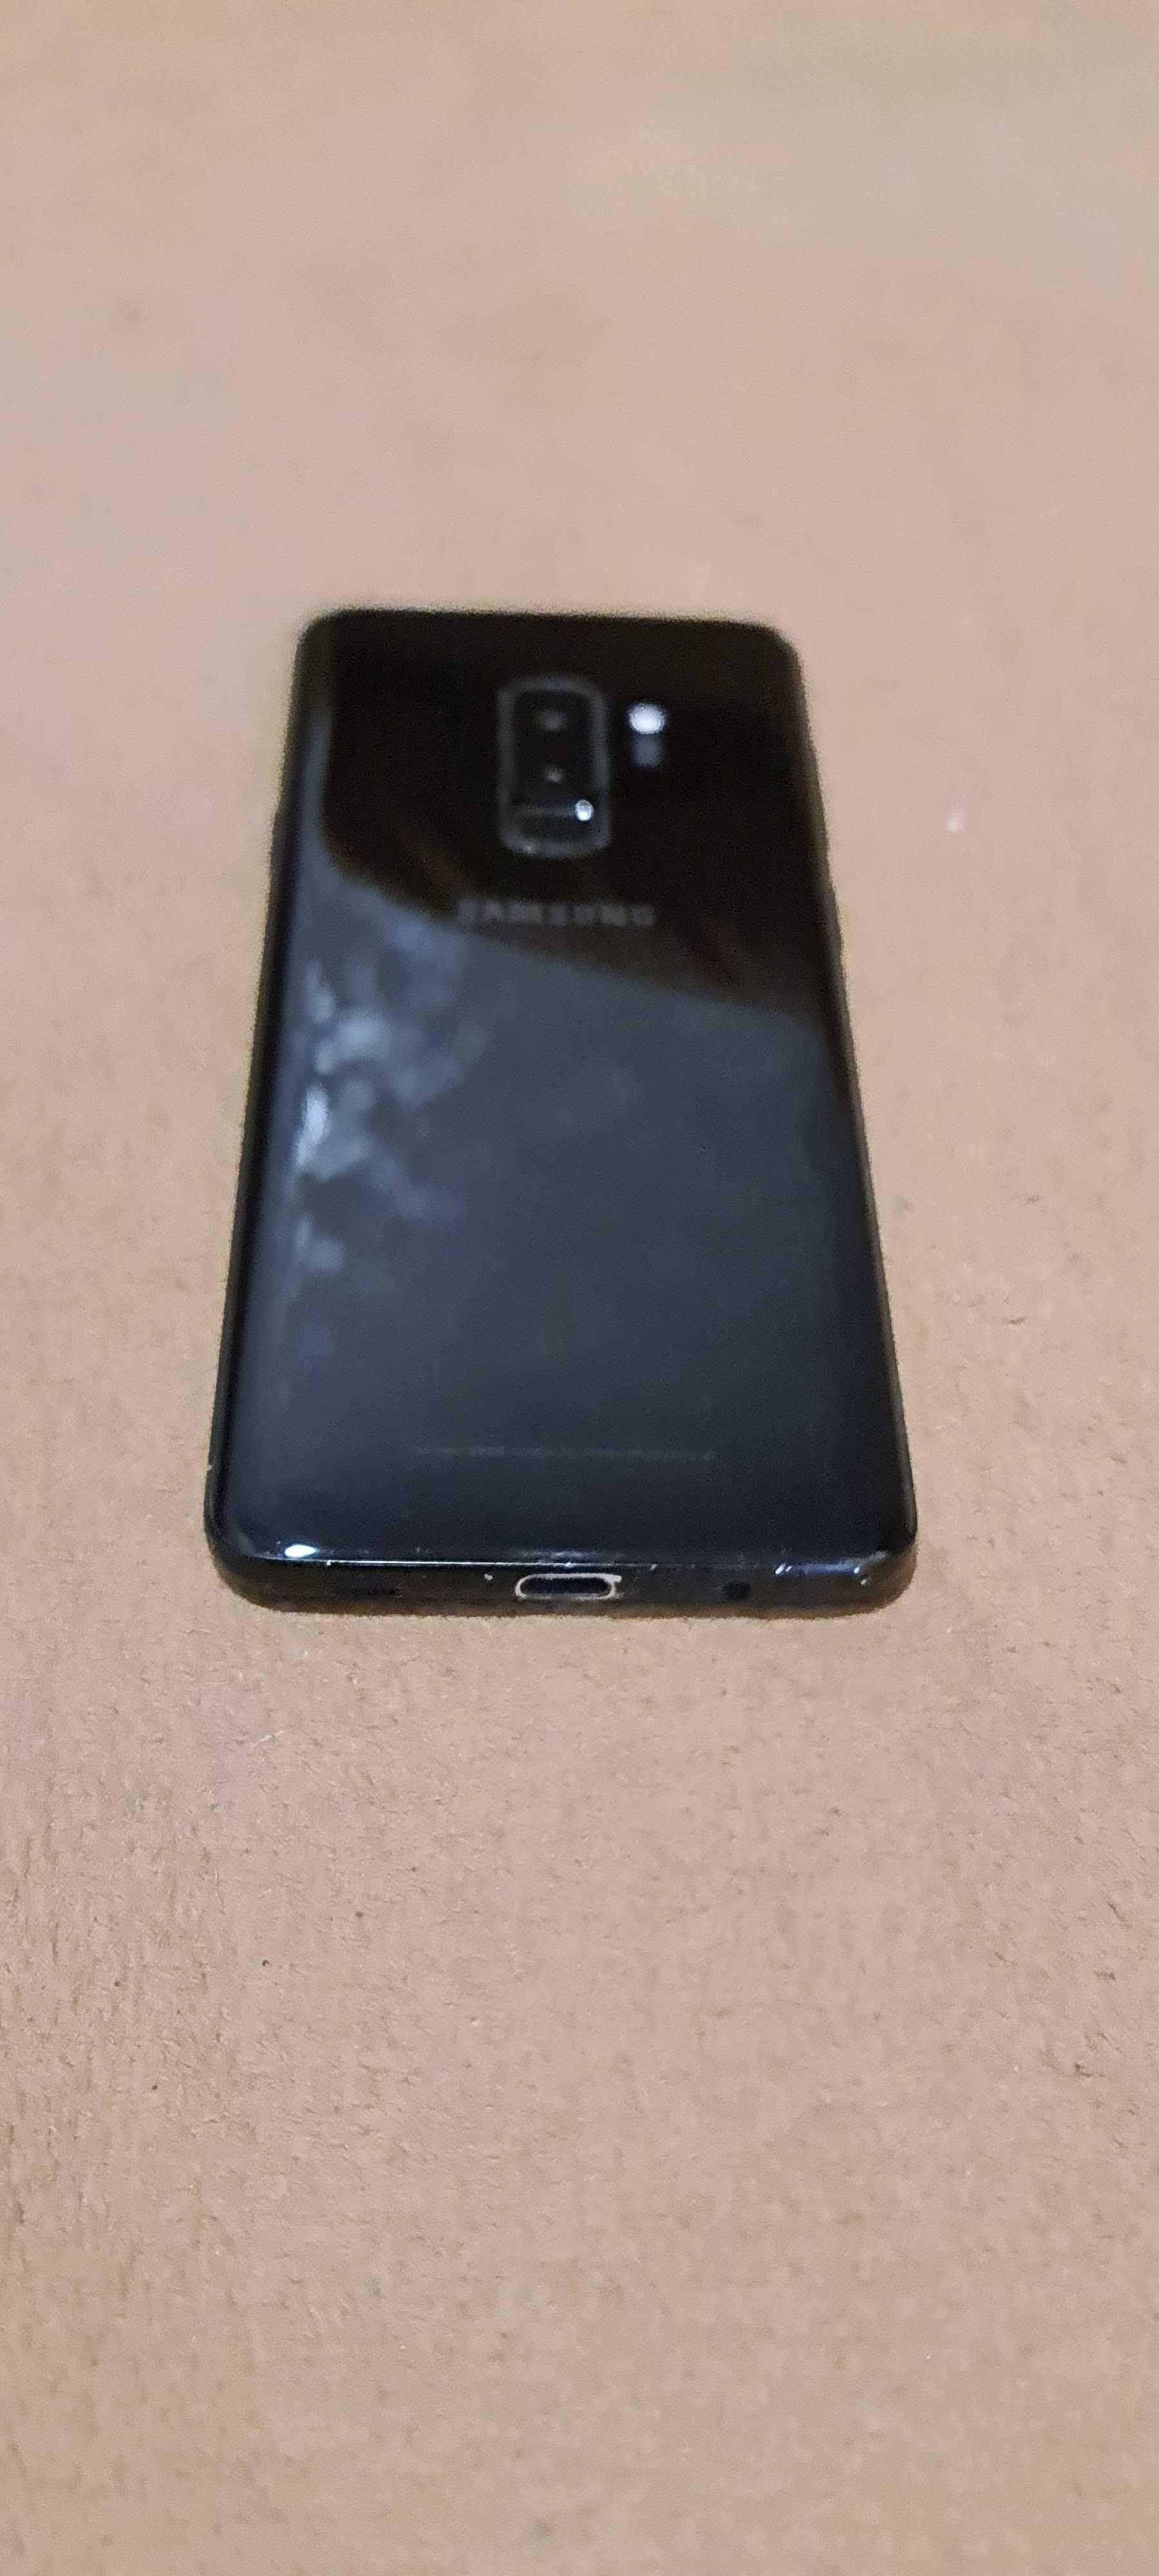 Samsung Galaxy S9 plus, 256 GB